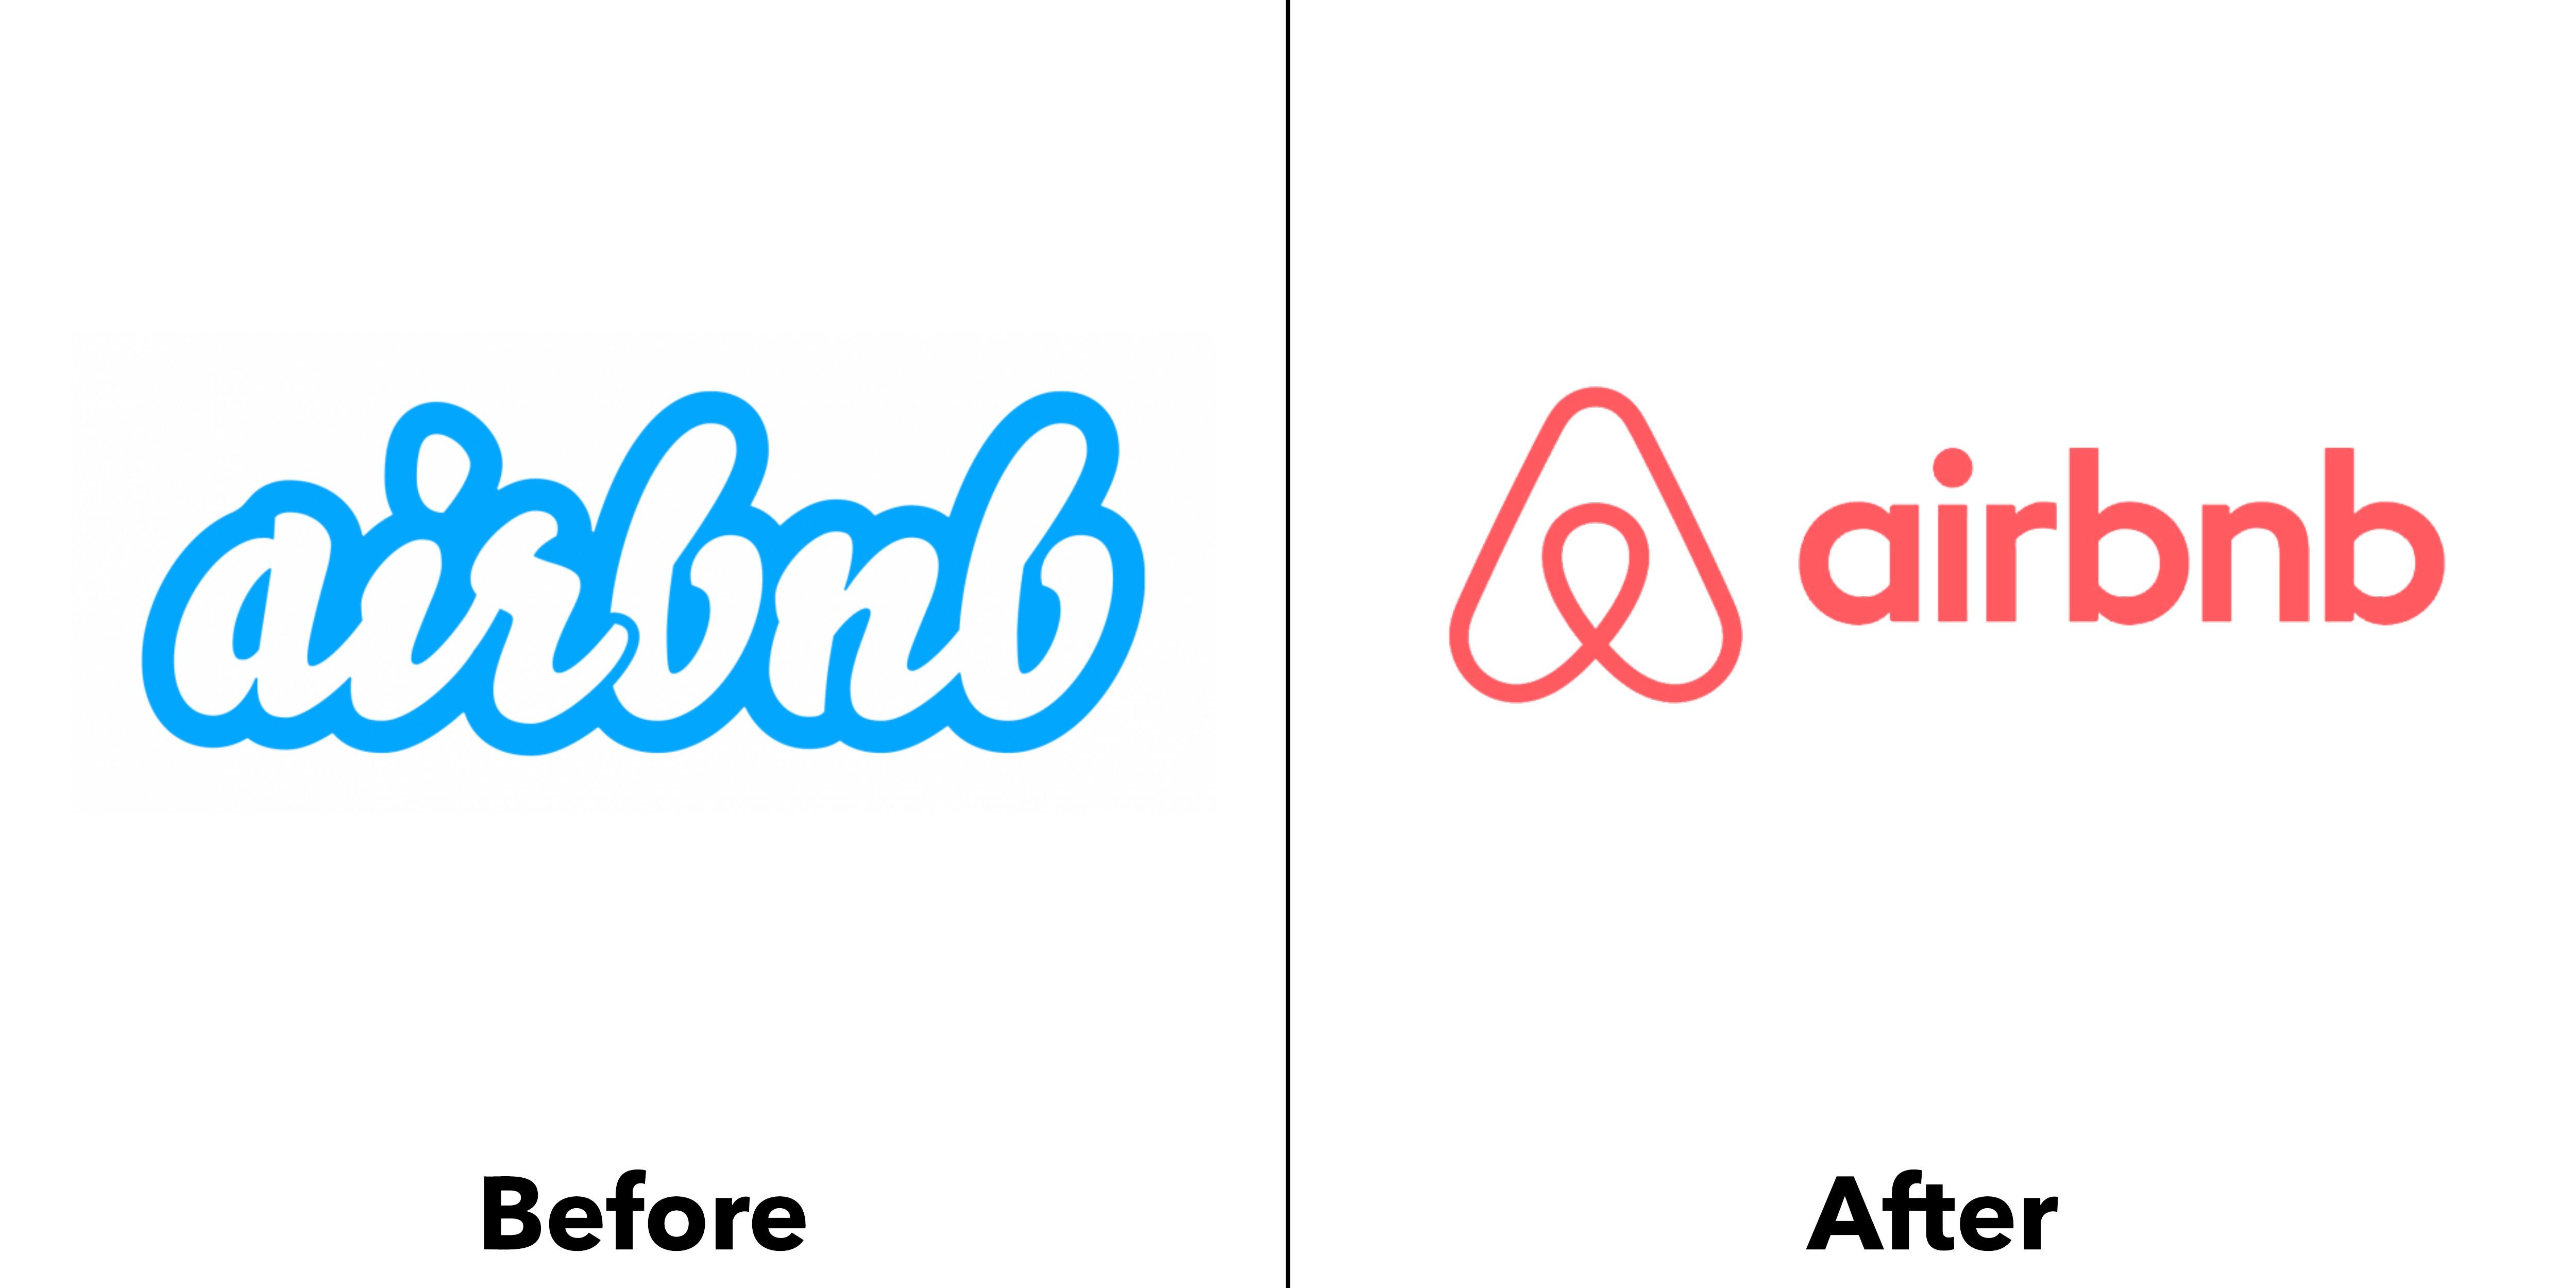 Airbnb rebranding